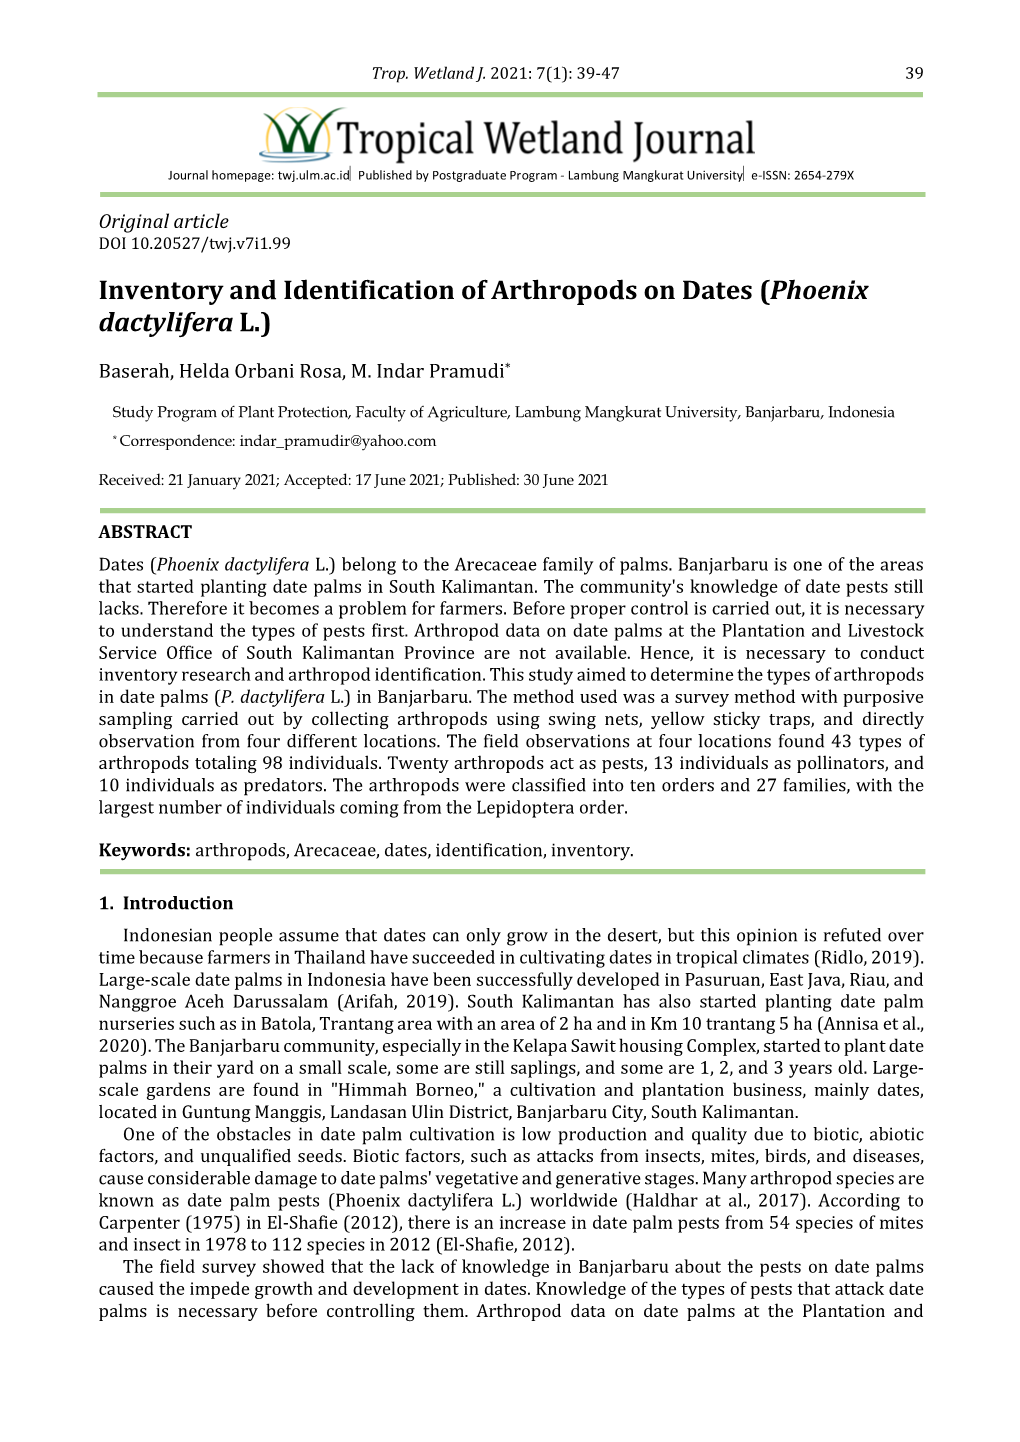 Inventory and Identification of Arthropods on Dates (Phoenix Dactylifera L.)